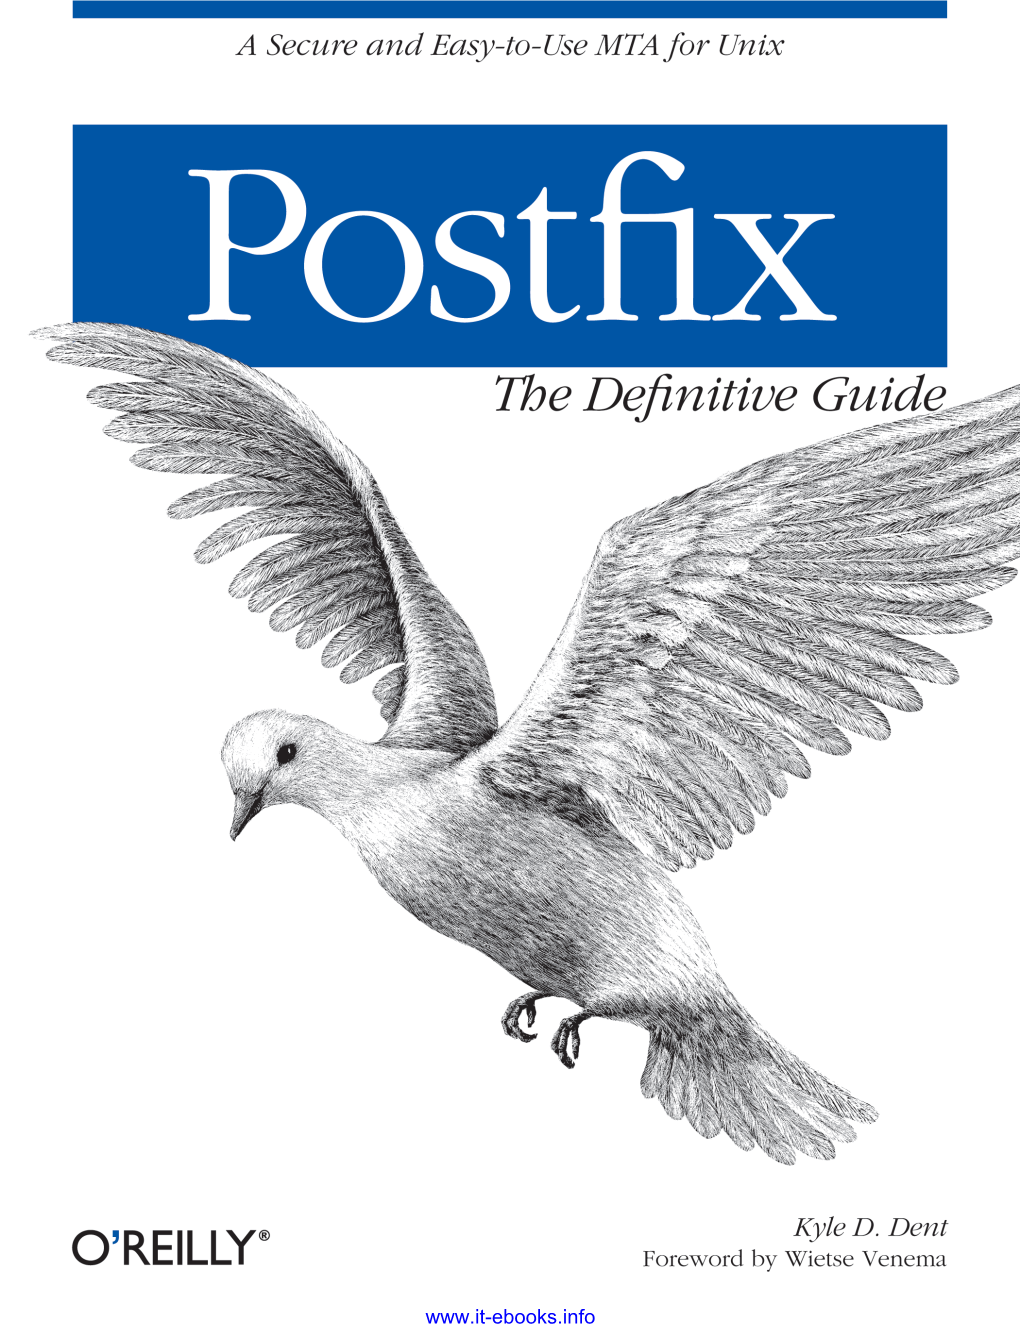 Postfix: the Definitive Guide by Kyle D